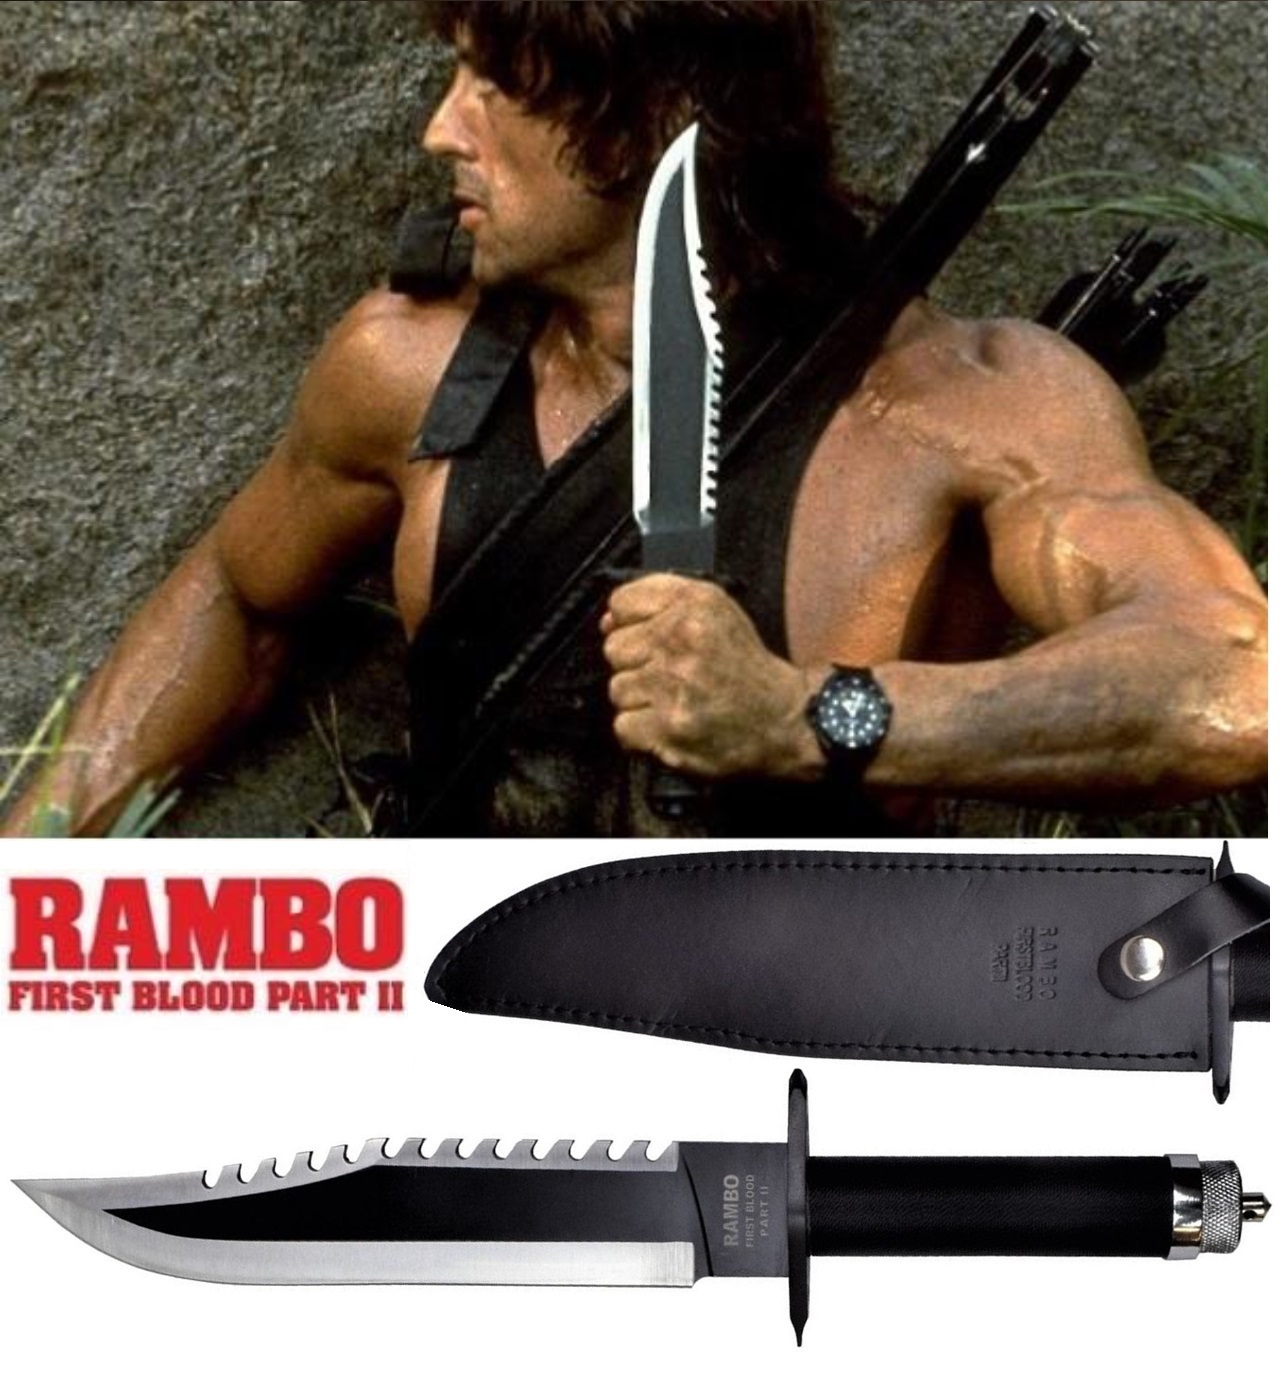 Poignard RAMBO couteau 40cm officiel Film Partie II